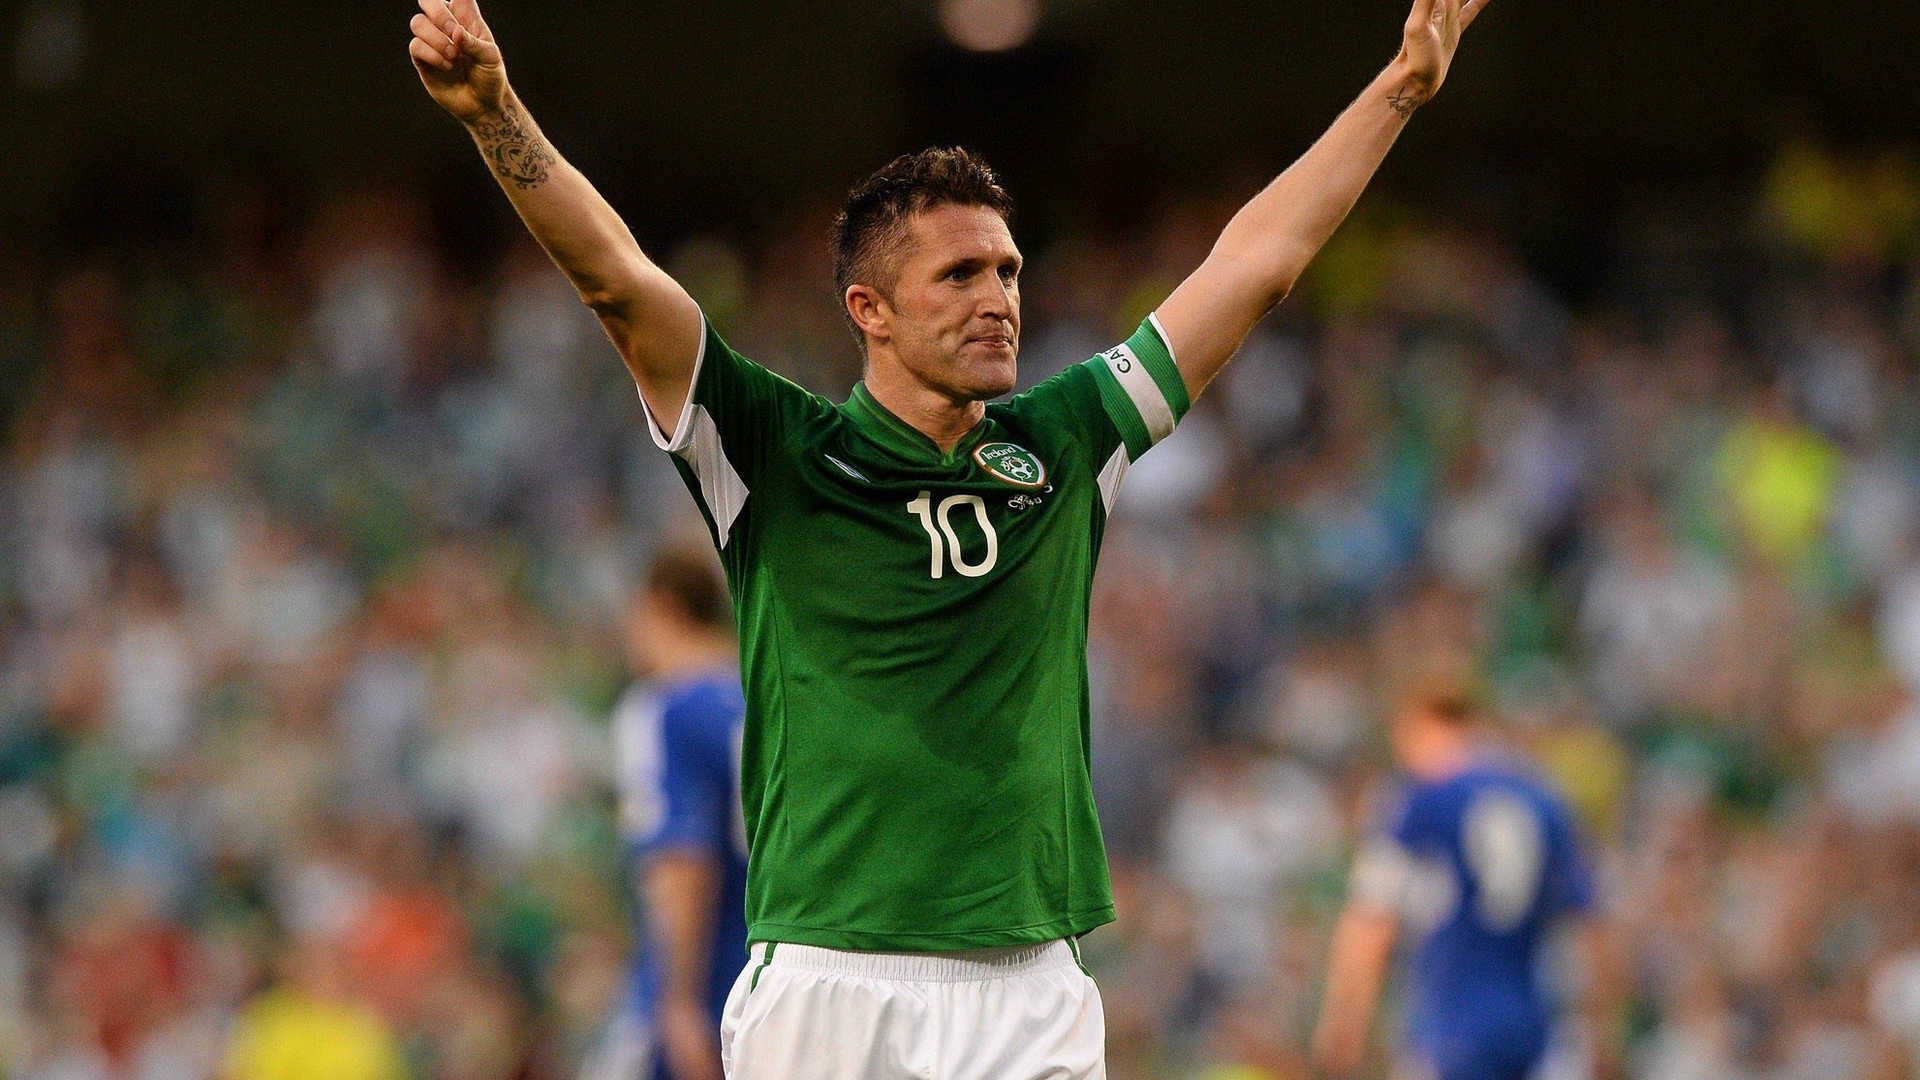 Wallpaper Robbie Keane, Football, La Galaxy - Robbie Keane Playing For Ireland - HD Wallpaper 